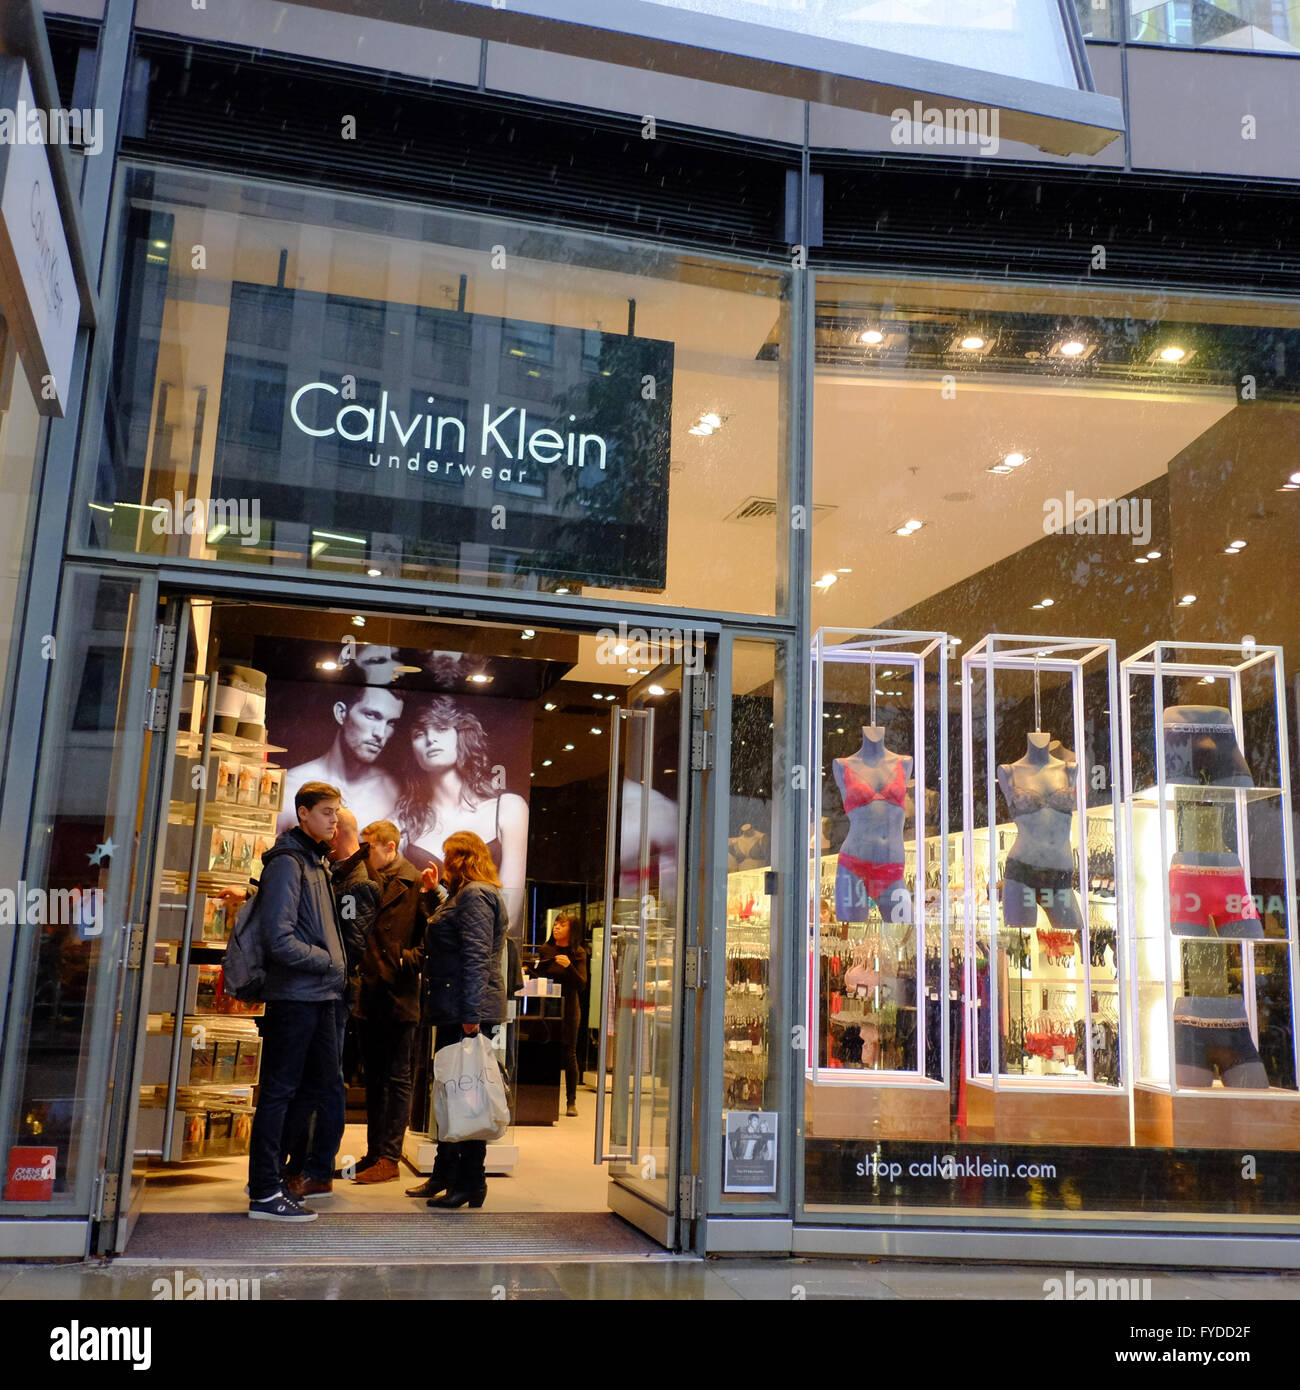 Calvin Klein underwear store in London with people in doorway Stock Photo -  Alamy